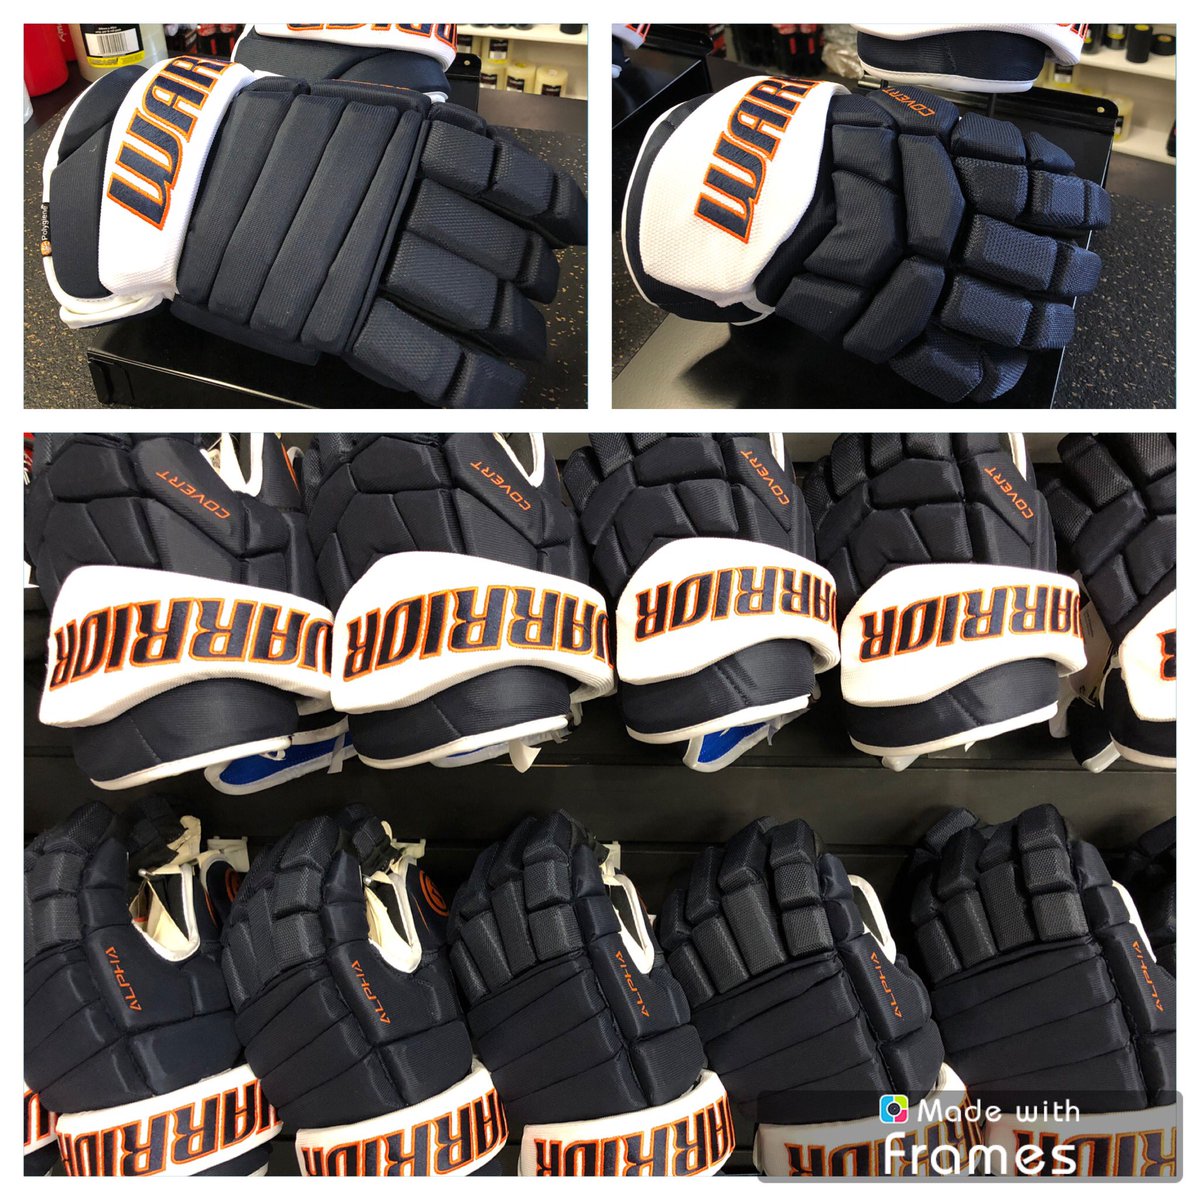 Brand new #customgloves from @WarriorHockey have arrived. #blazers #kamloops